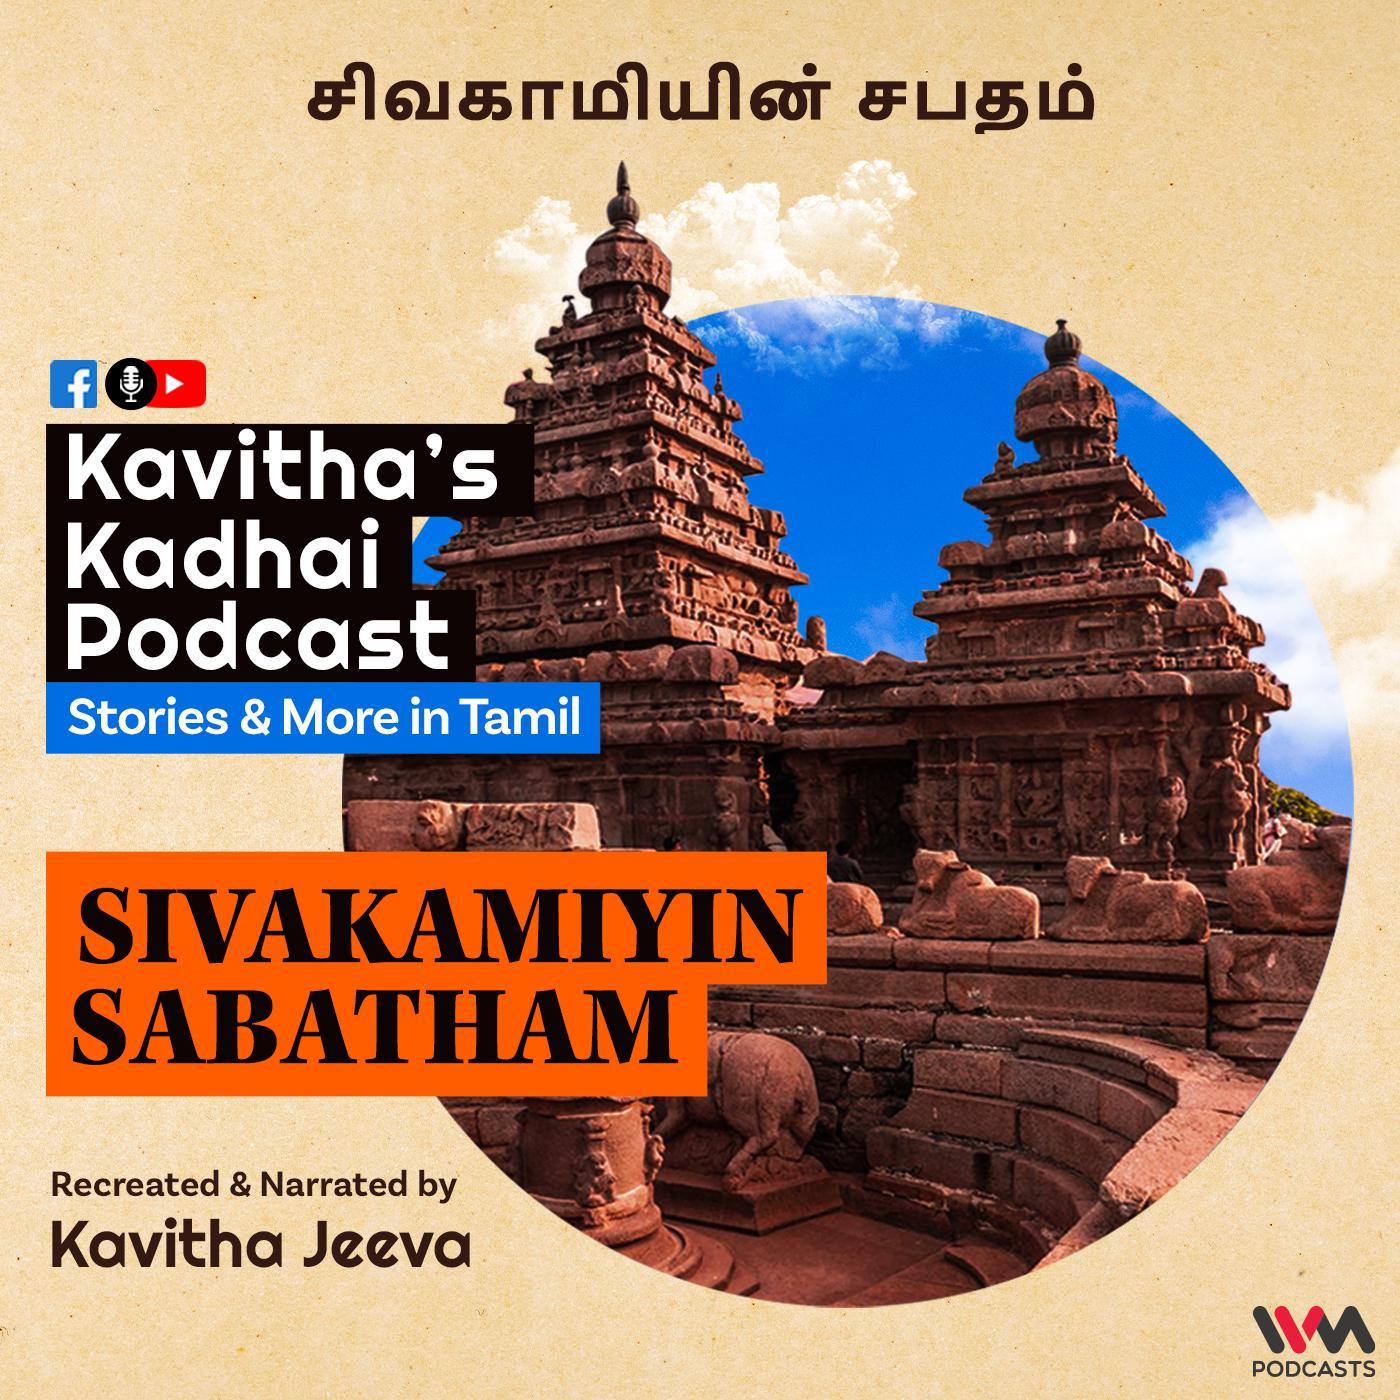 KadhaiPodcast's Sivakamiyin Sabatham with Kavitha Jeeva - Episode #126